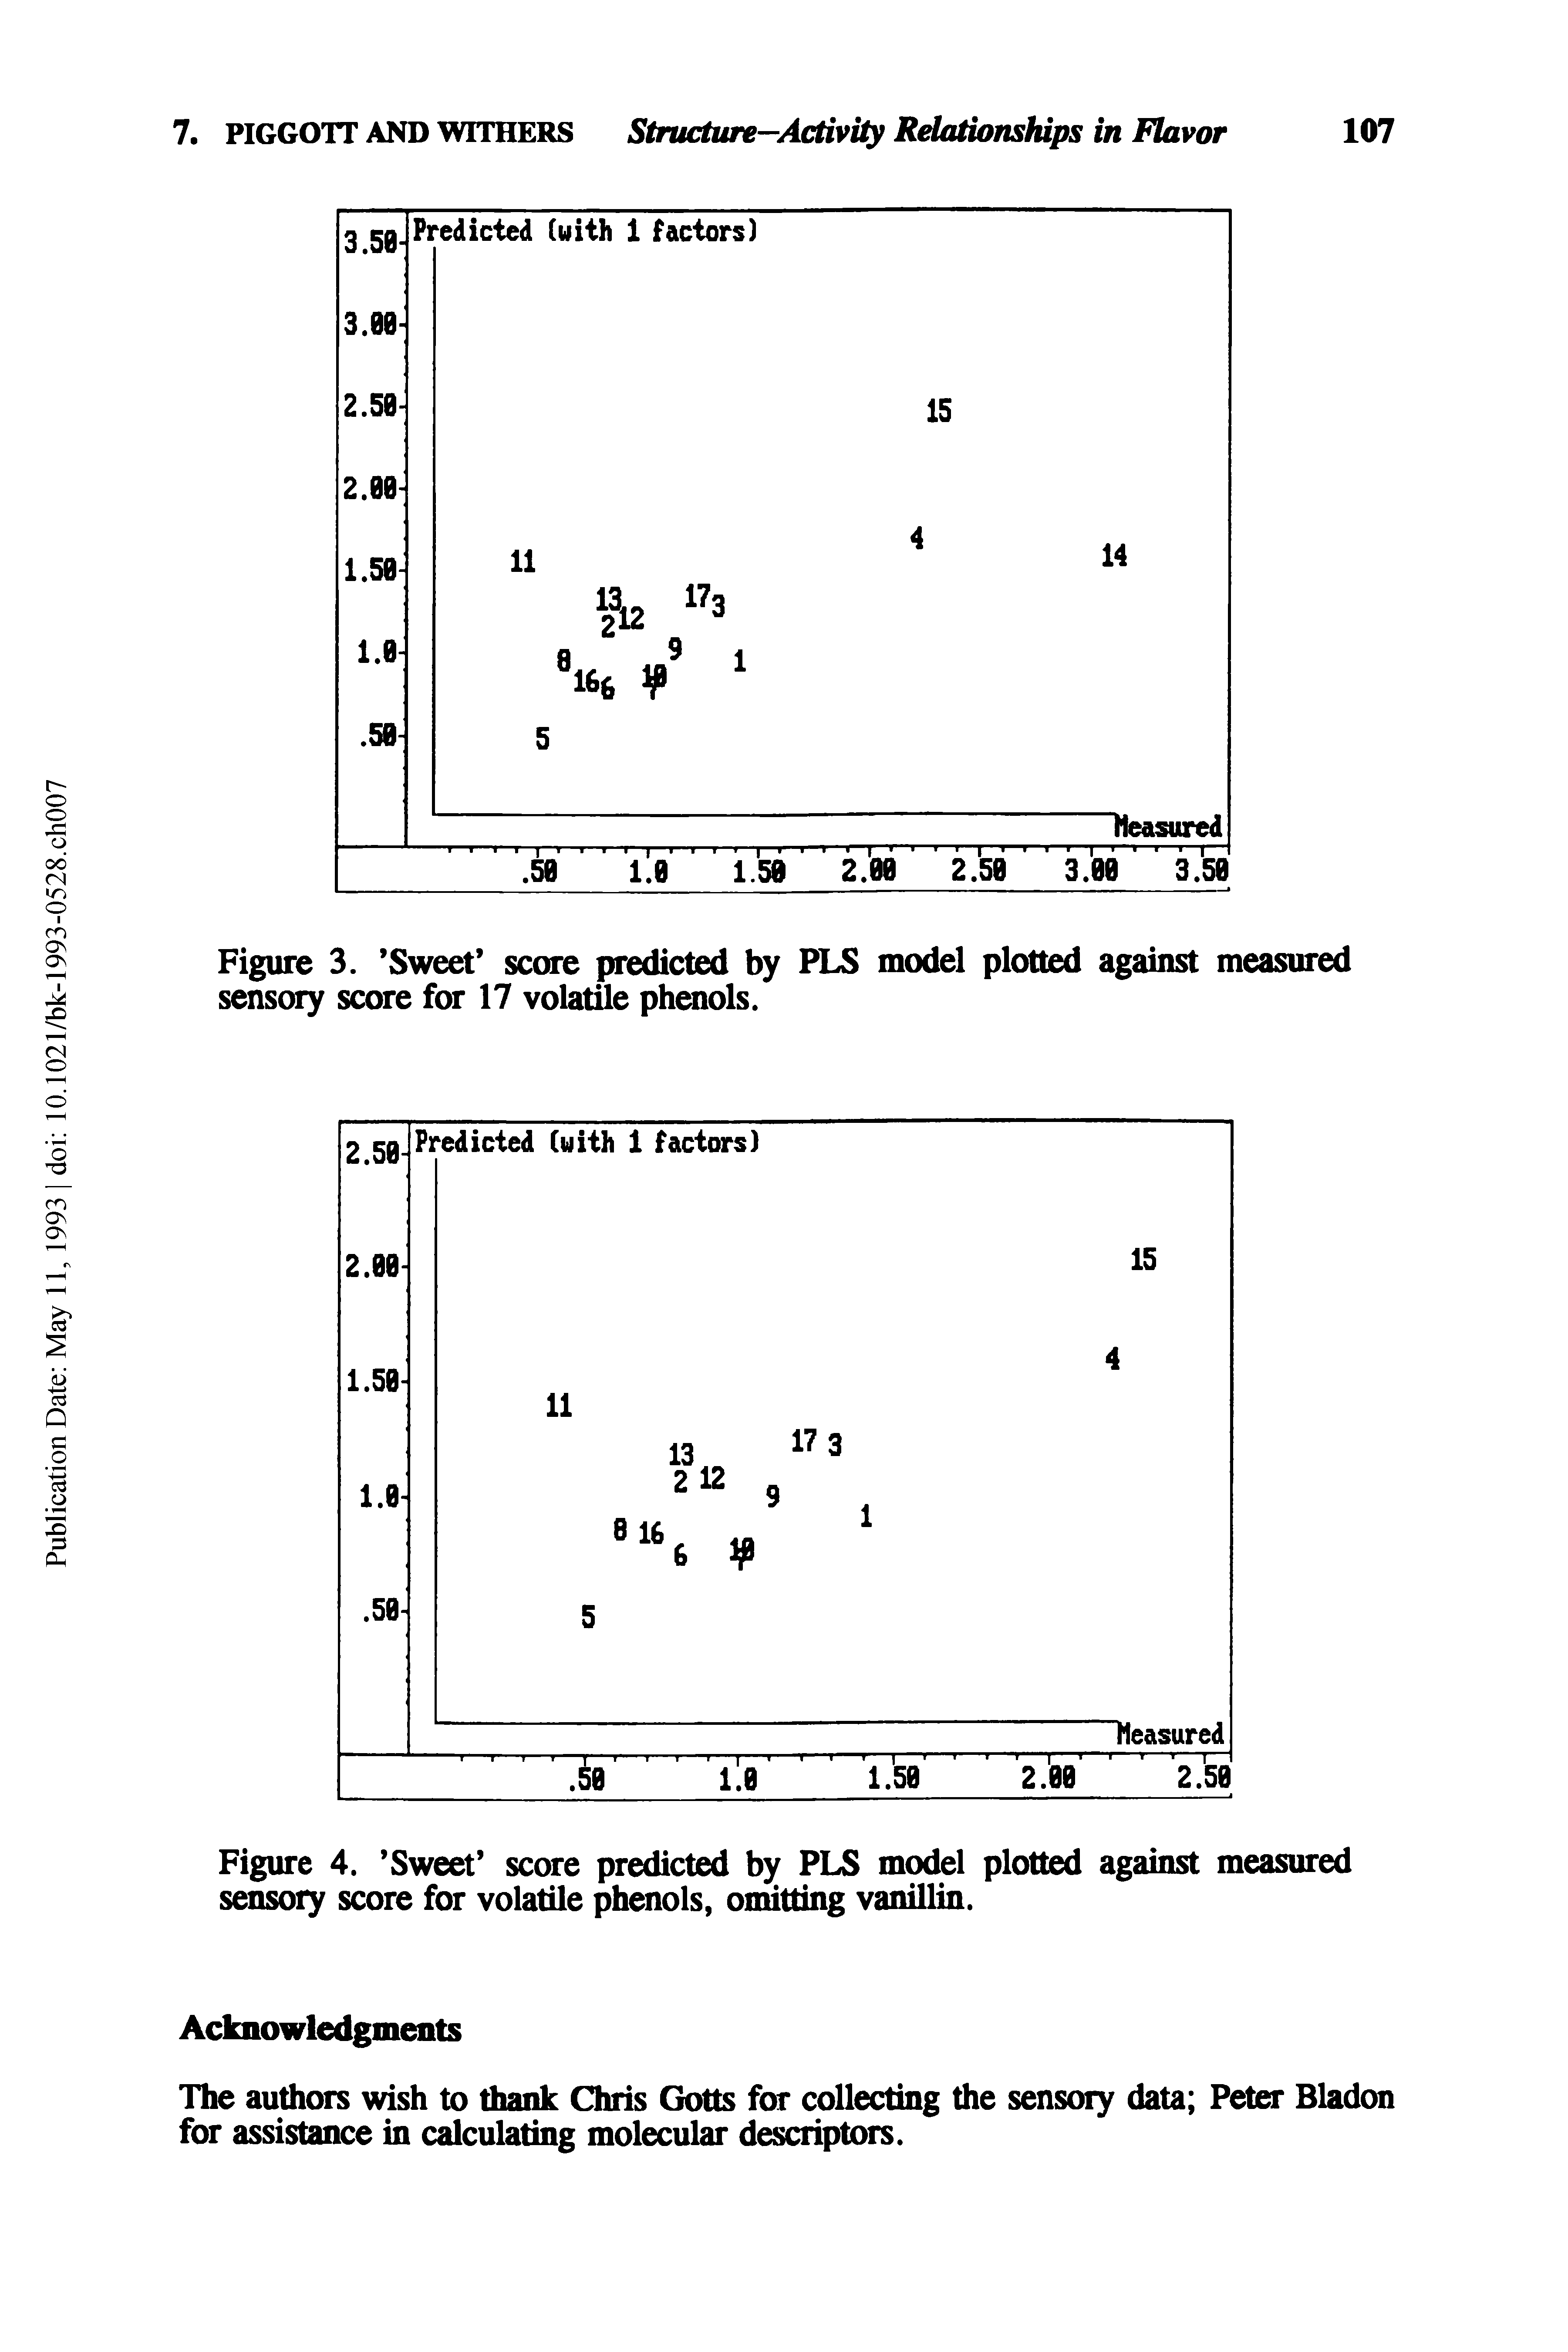 Figure 4. Sweet score predicted by PLS model plotted against measured sensoiy score for volatile phenols, omitting vanillin.